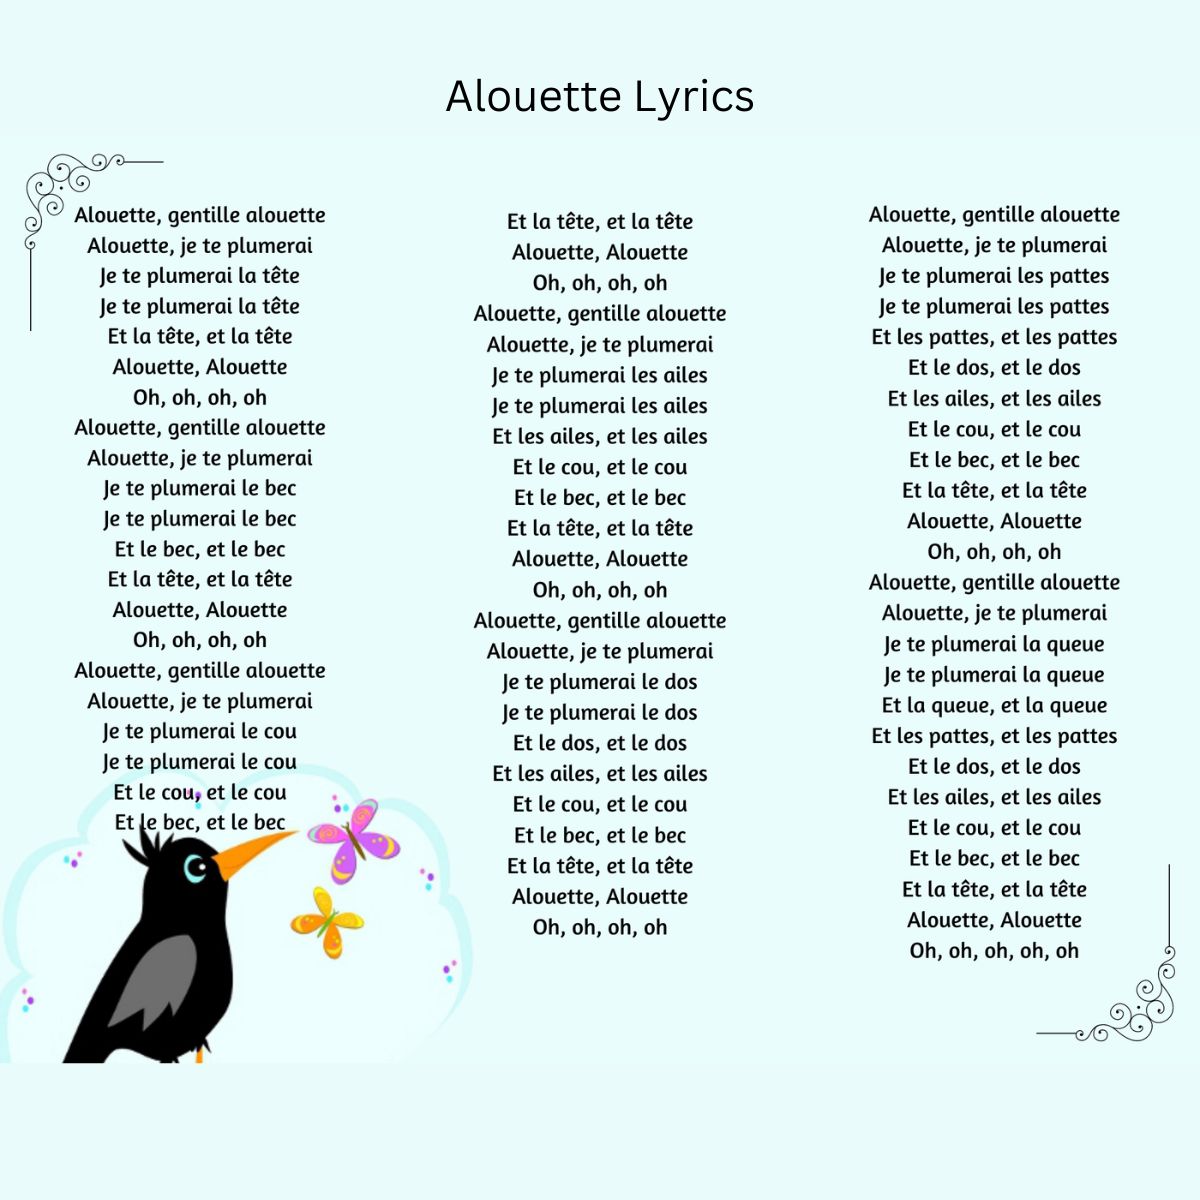 Alouette lyrics in Blue background